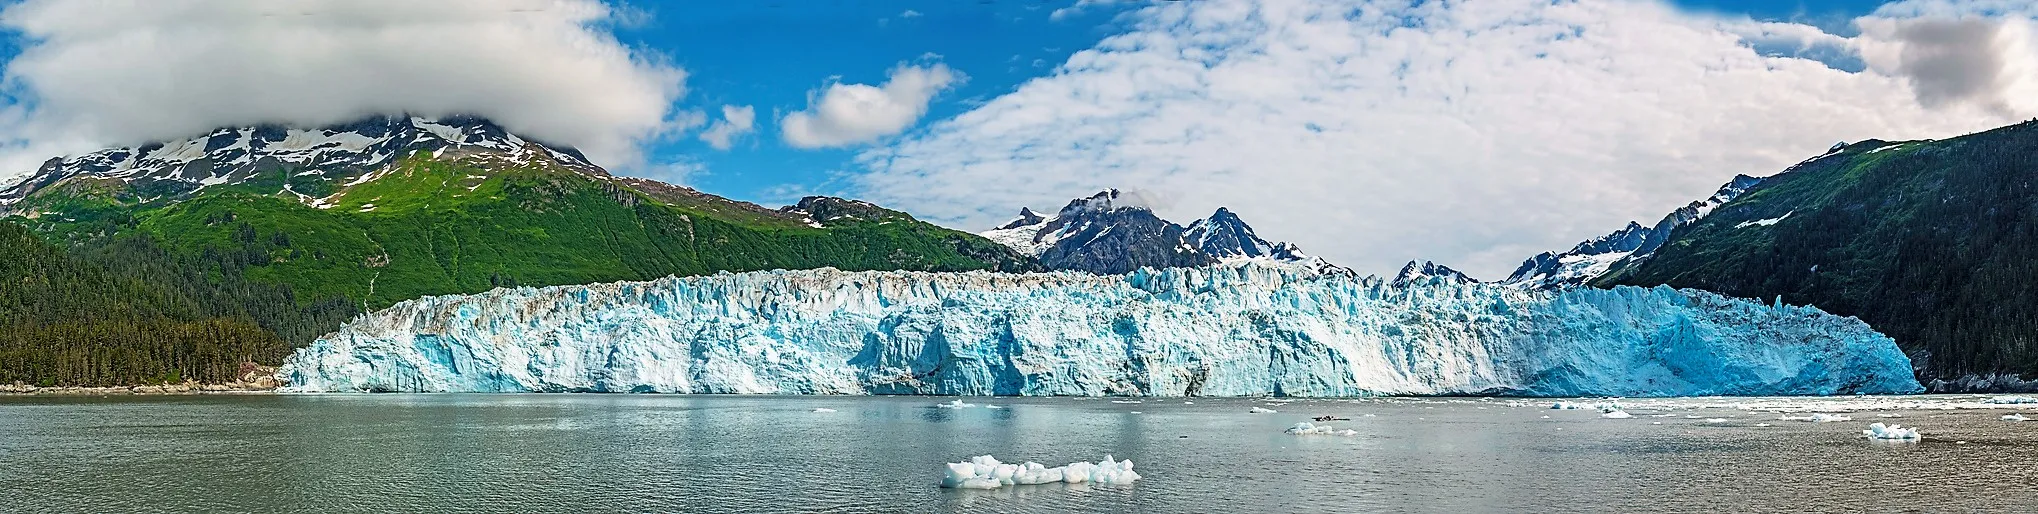 Le glacier Meares, un glacier de marée à Unakwik Inlet dans la forêt de Chugach, en Alaska.© iStock / Gerald Corsi